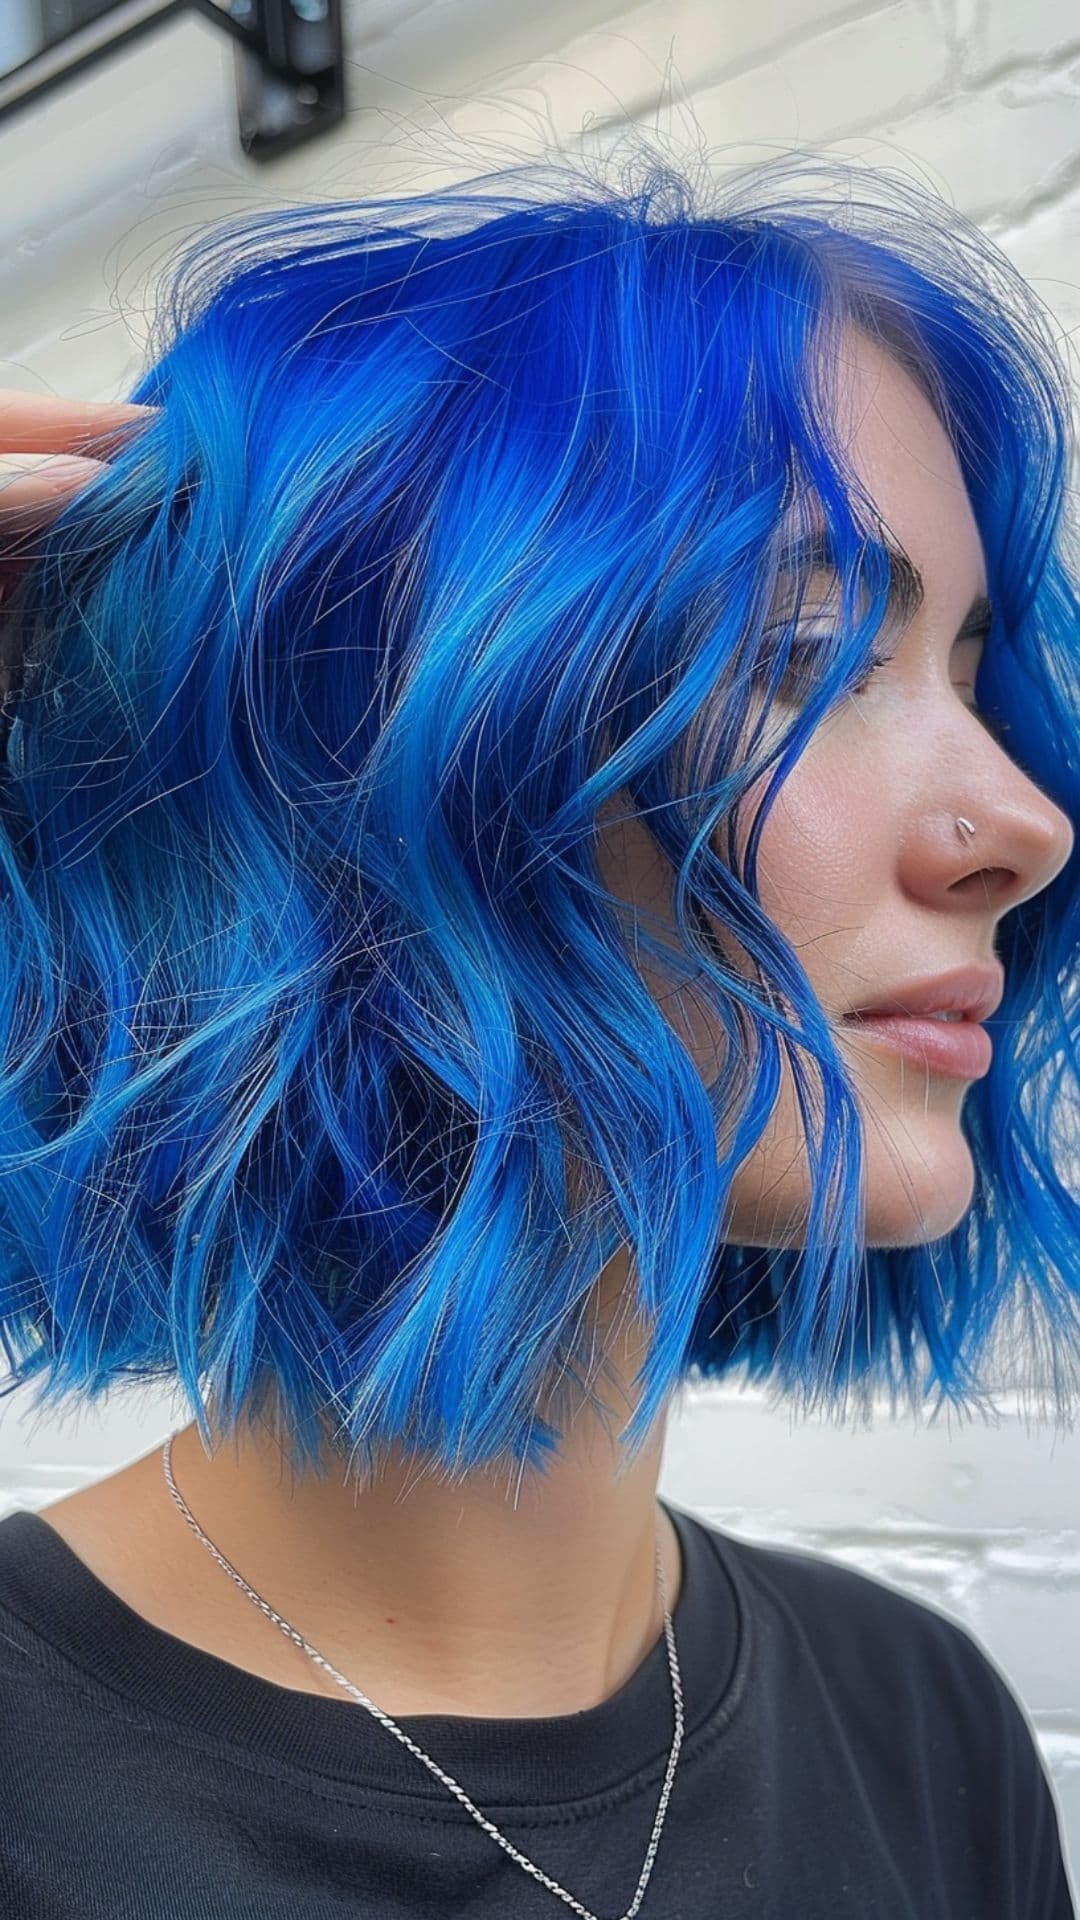 A woman modelling a short sapphire blue hair.